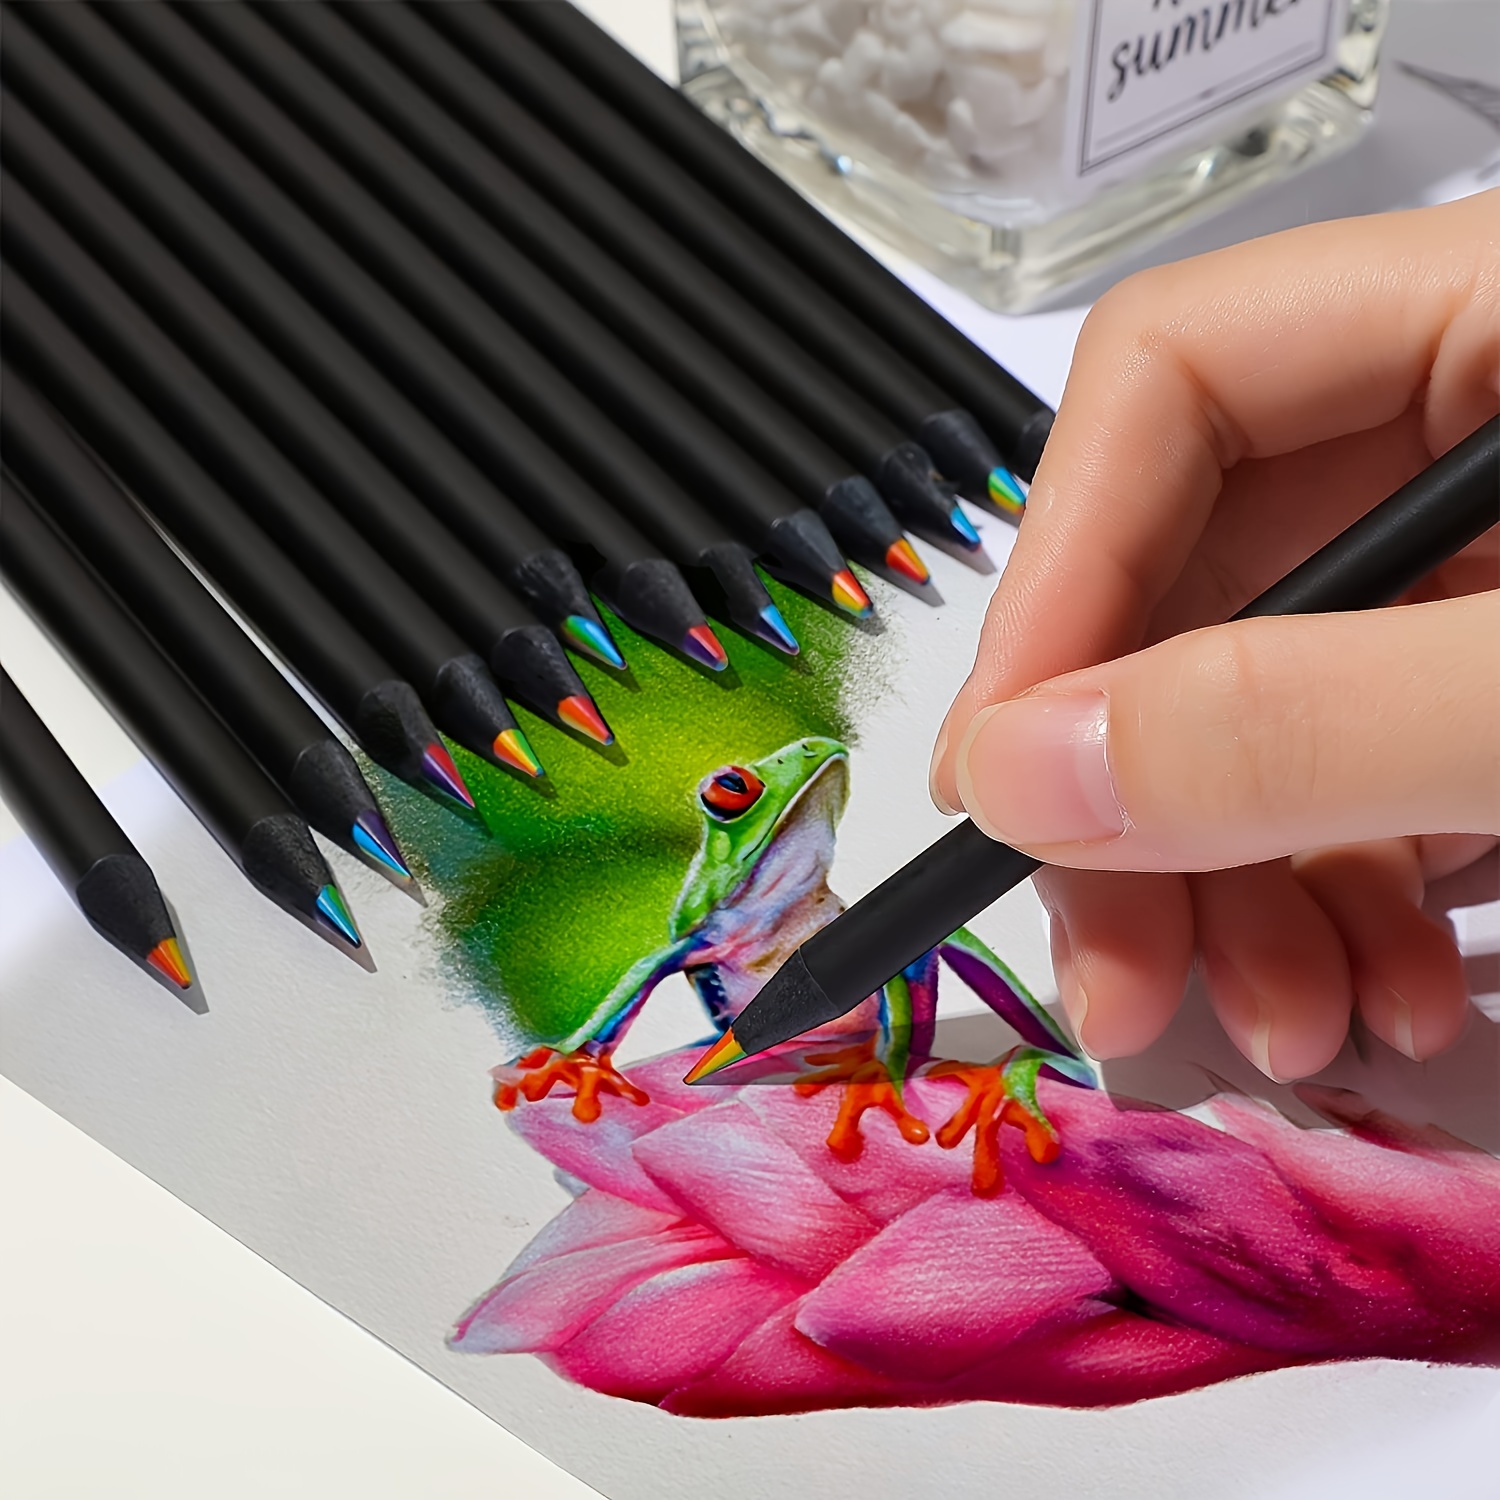 220 PCS Stationery Kids Gift Colored Pencils Crayon Wooden Box Art Set -  China Art Set, Drawing Painting Set